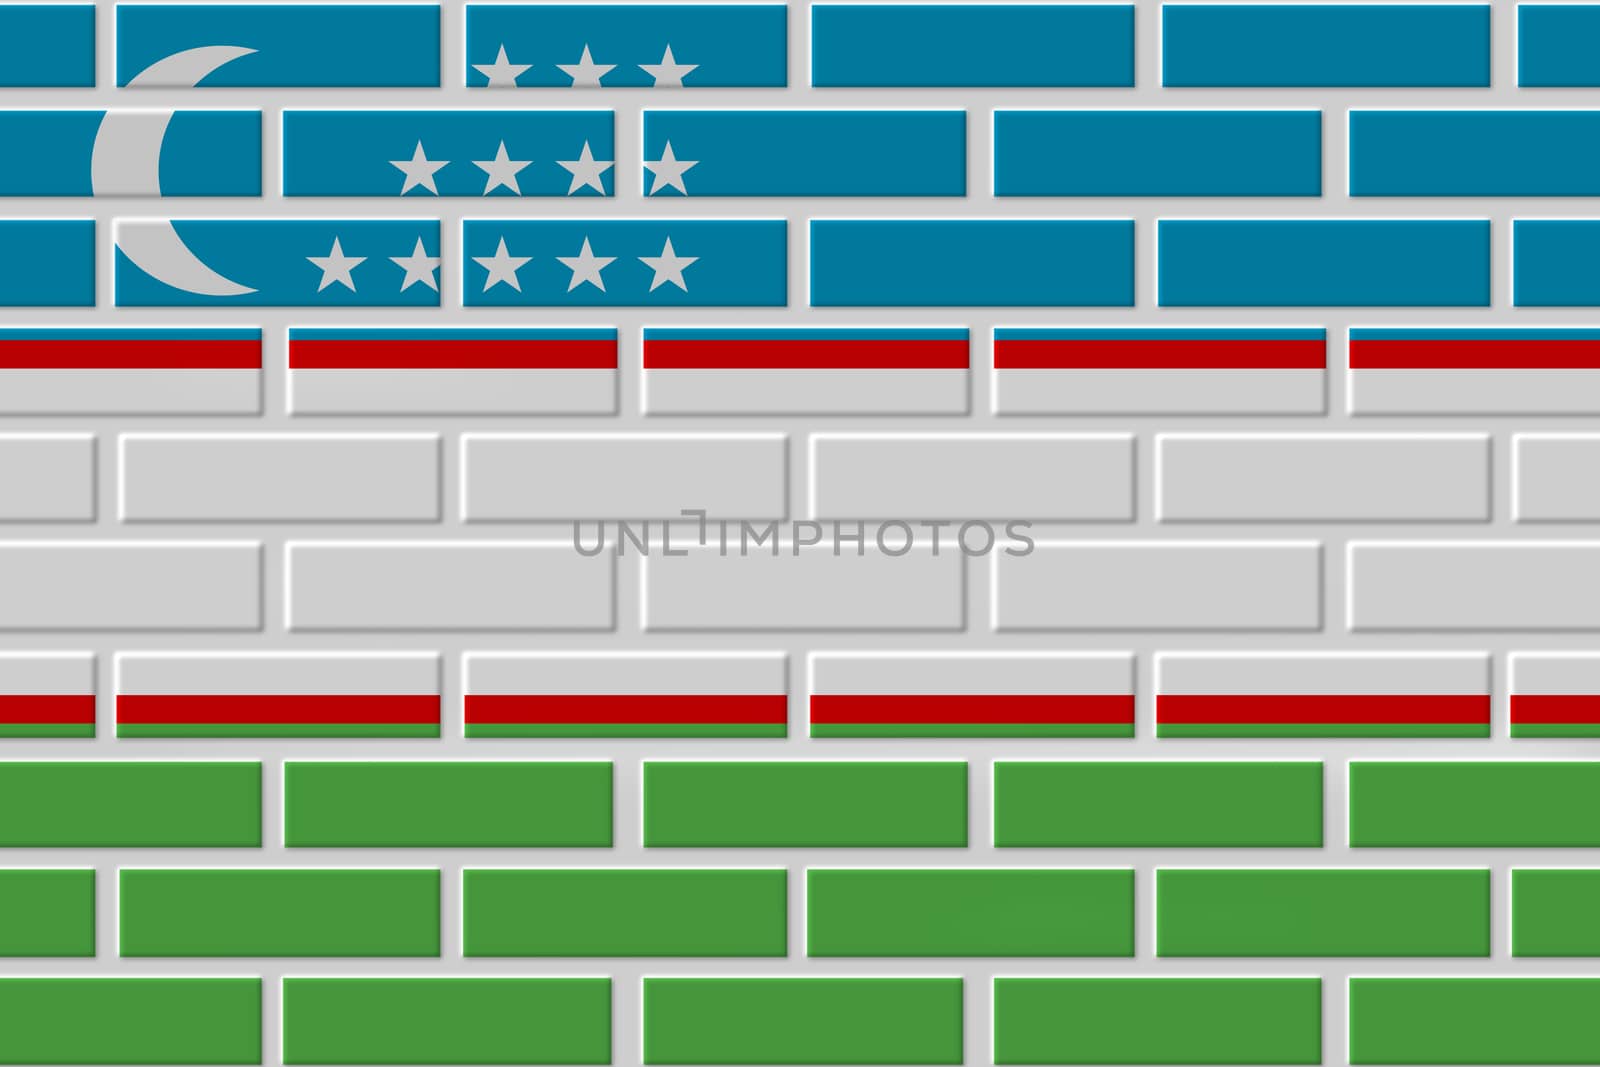 Uzbekistan brick flag illustration by Visual-Content